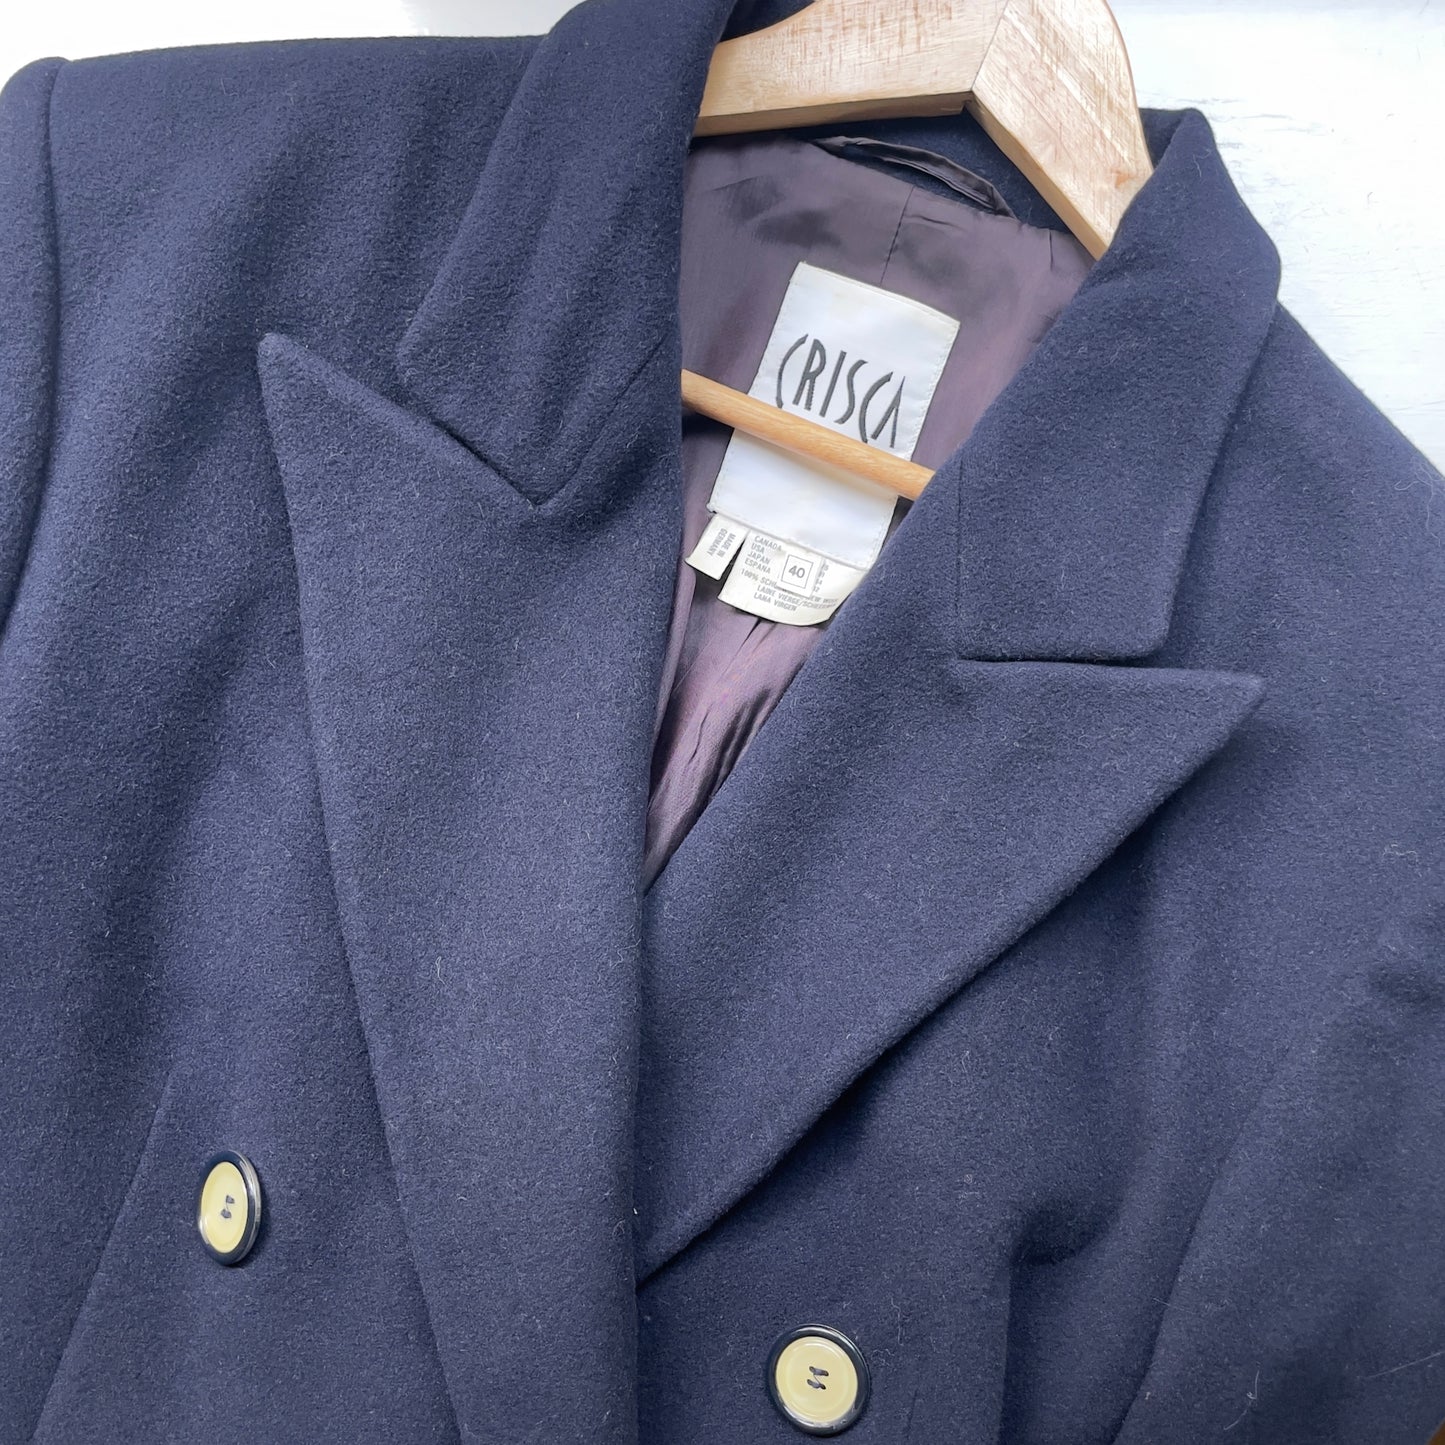 Vintage Blue Wool Coat - Crisca